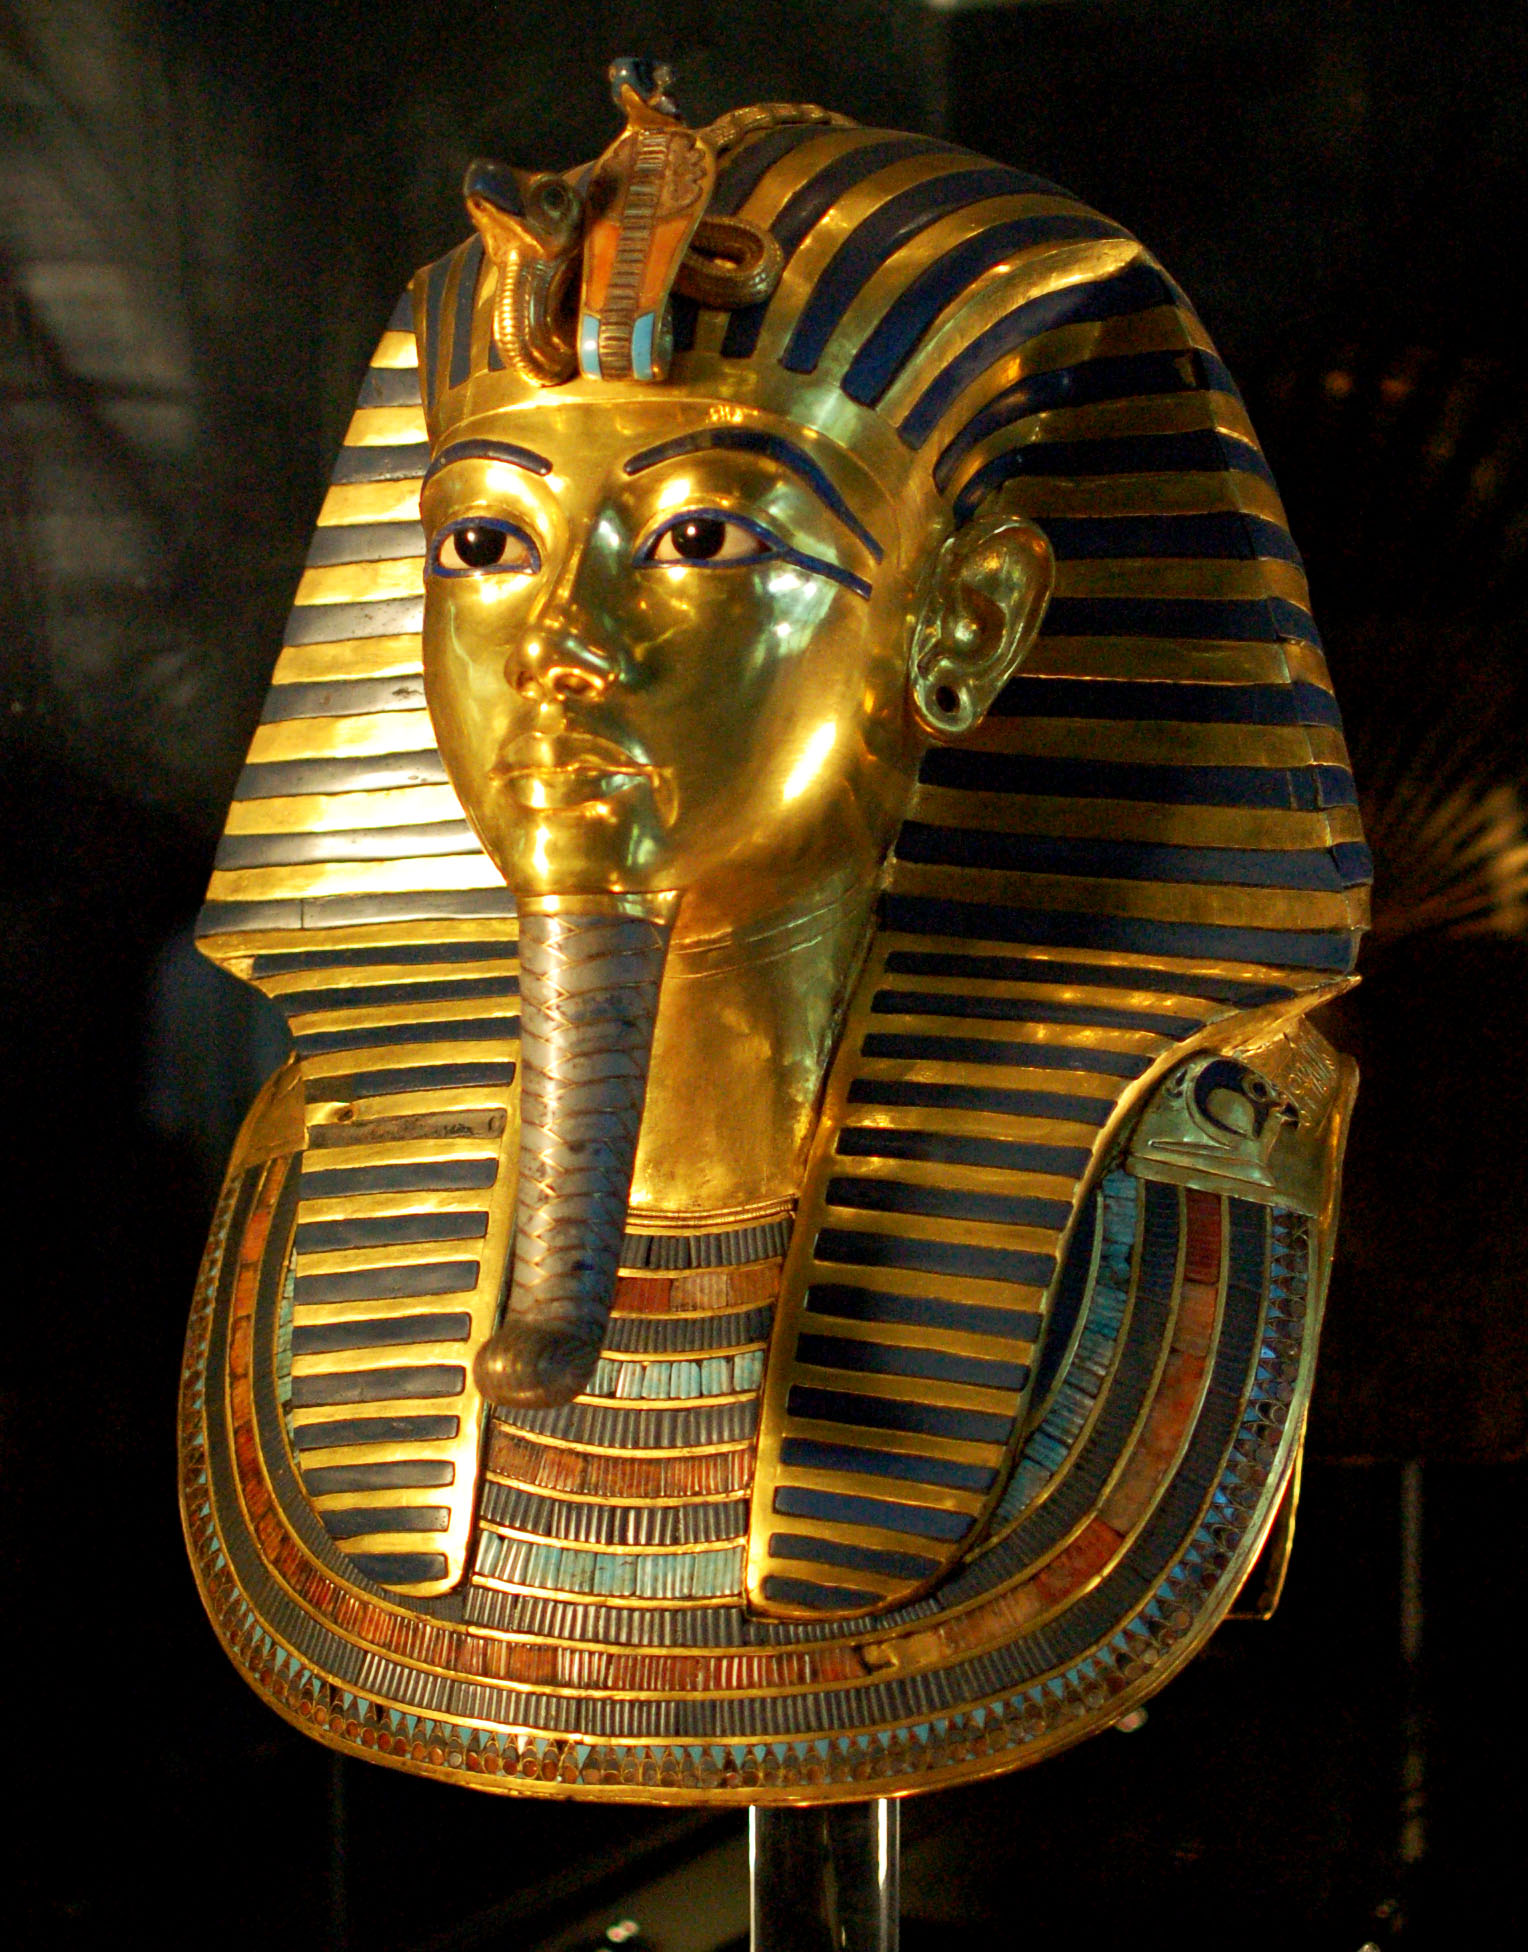 Включить фараона. Фараон Египта Тутанхамон. Маска Тутанхамона Нефертити. Маска Тутанхамона. Золотая маска Тутанхамона Династия.